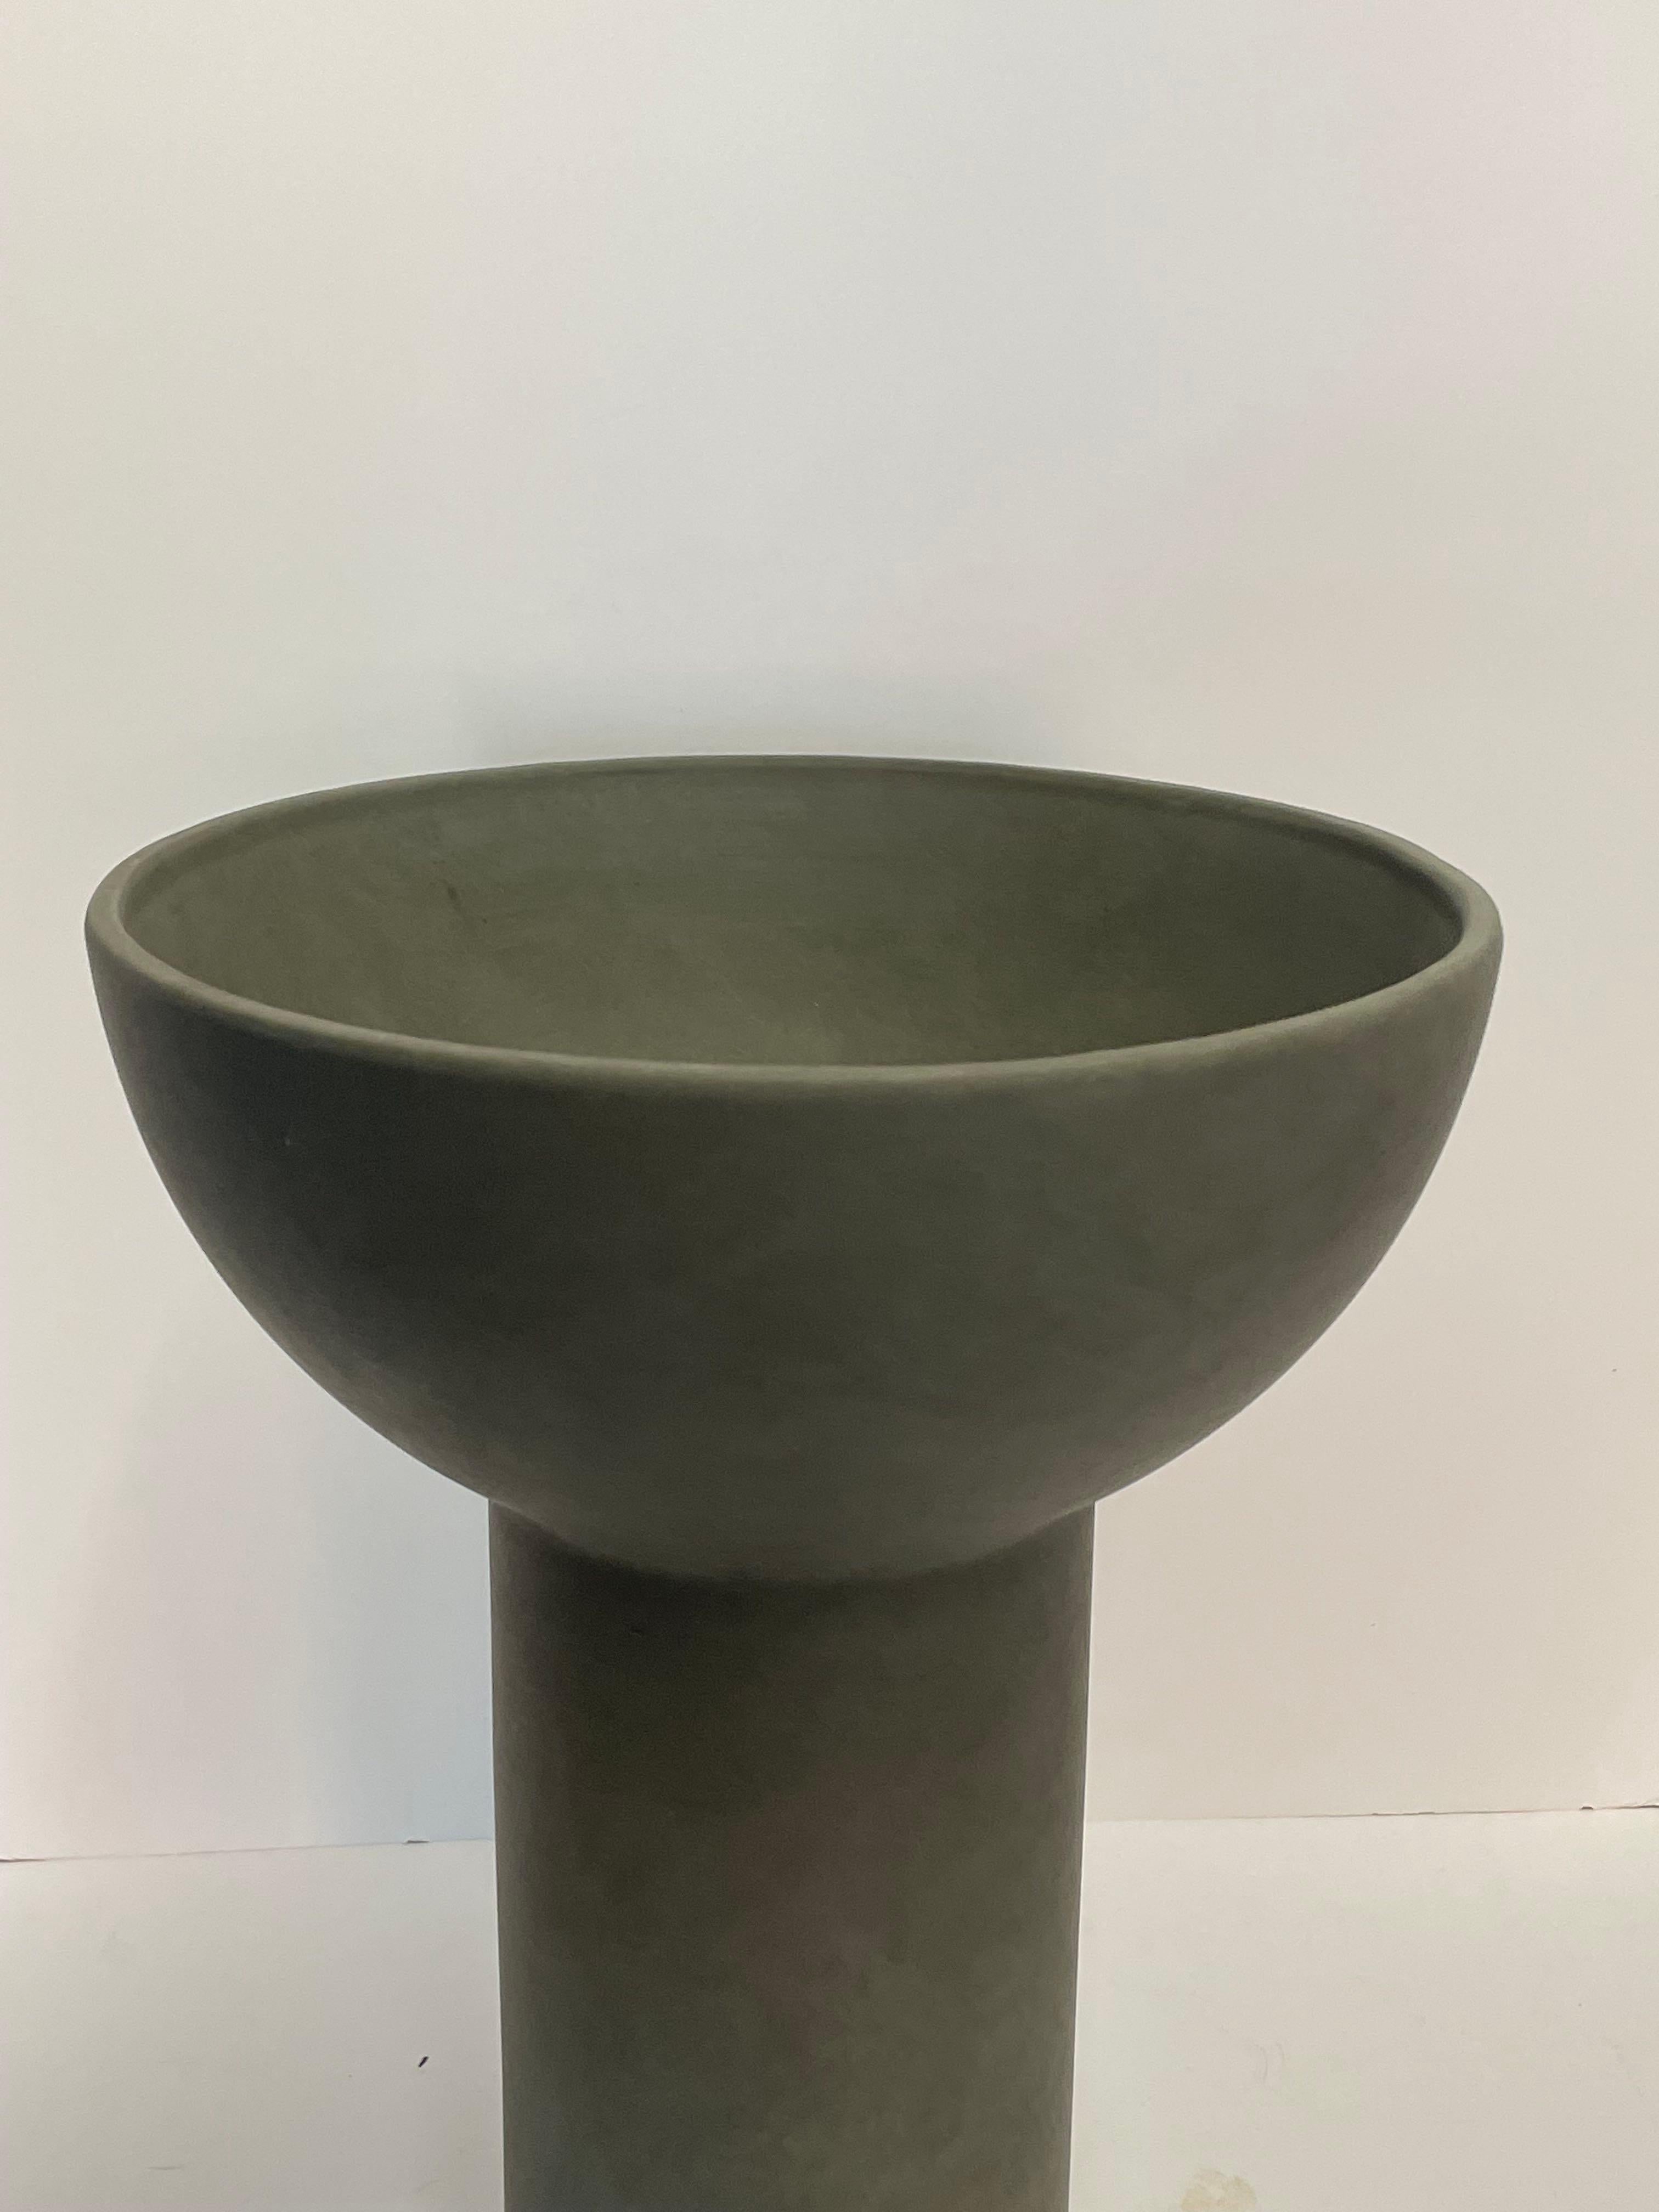 Contemporary Danish designed tall dark grey matte glazed finish vase.
Tubular shape with large cup shaped top.